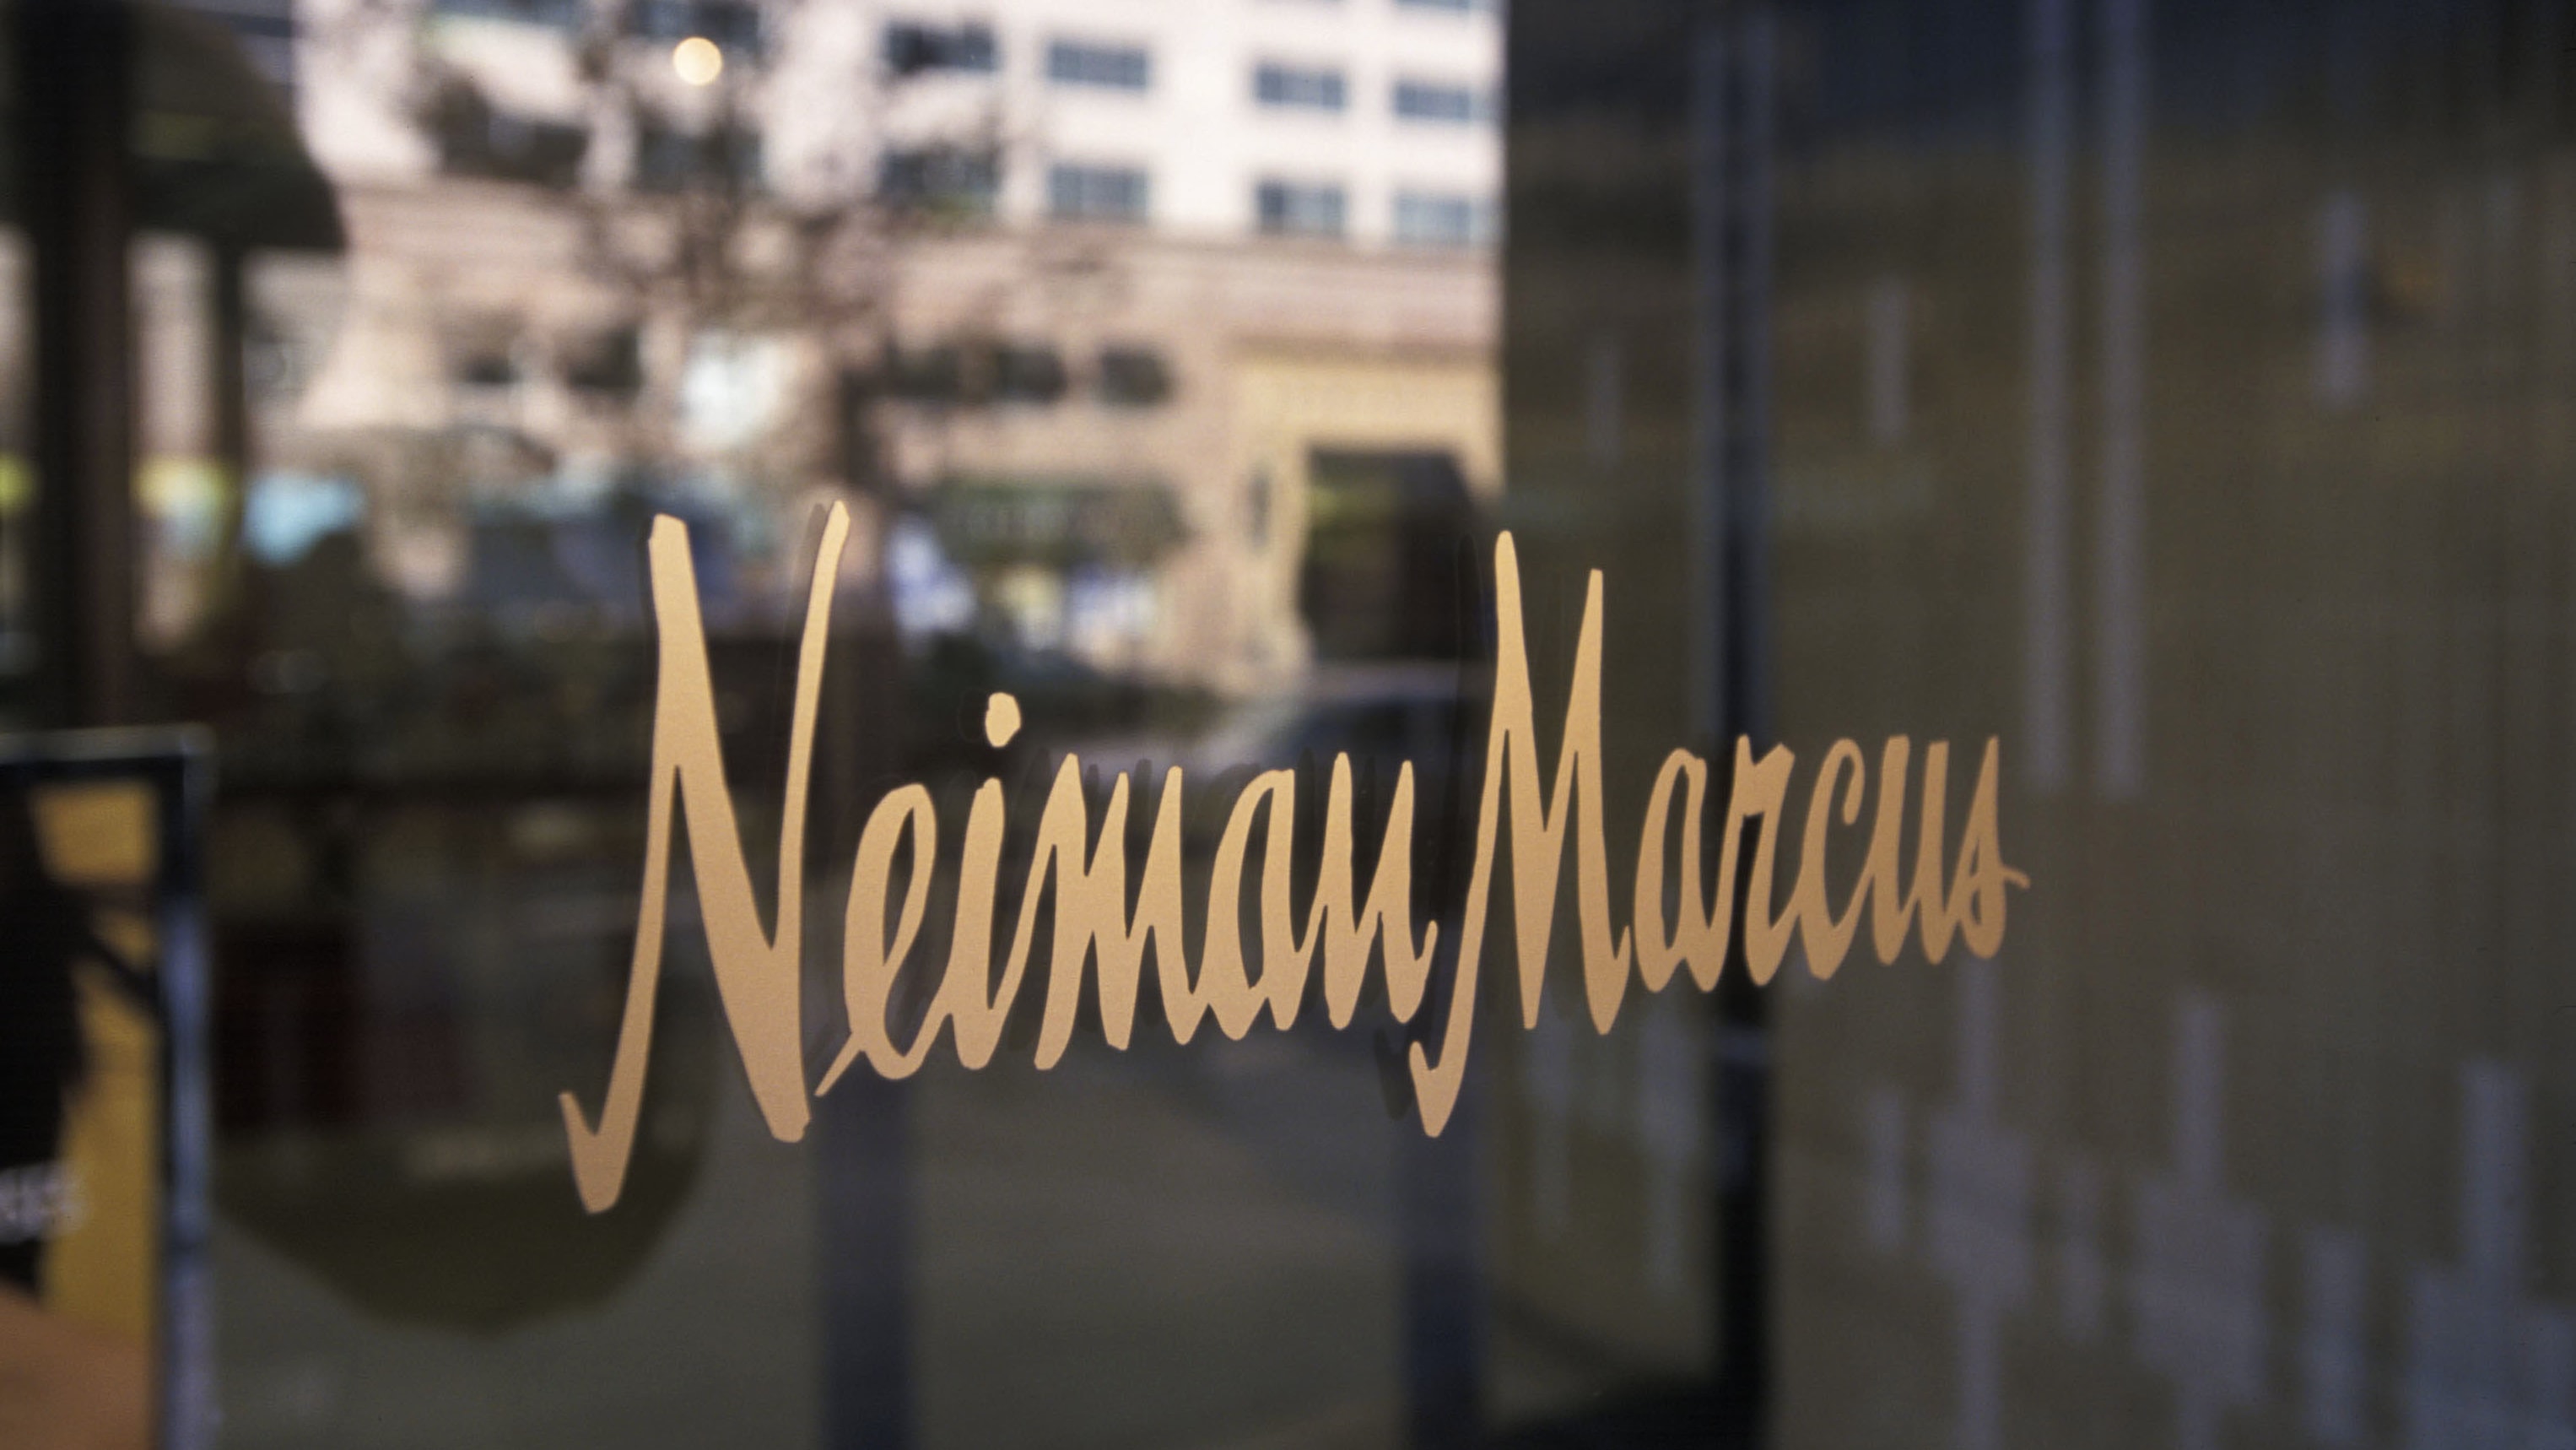 Neiman Marcus in talks to merge with Saks: Report